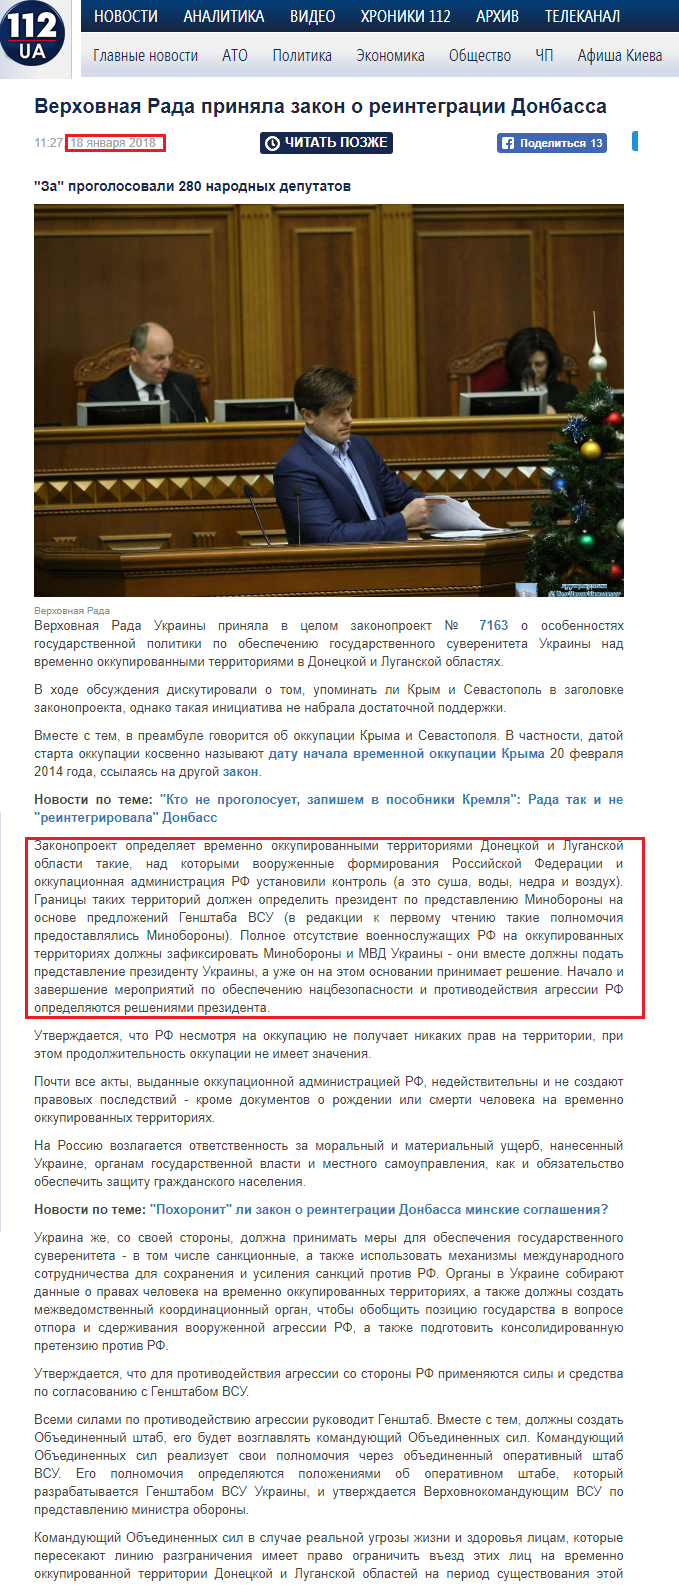 https://112.ua/politika/verhovnaya-rada-prinyala-zakon-o-reintegracii-donbassa-429343.html